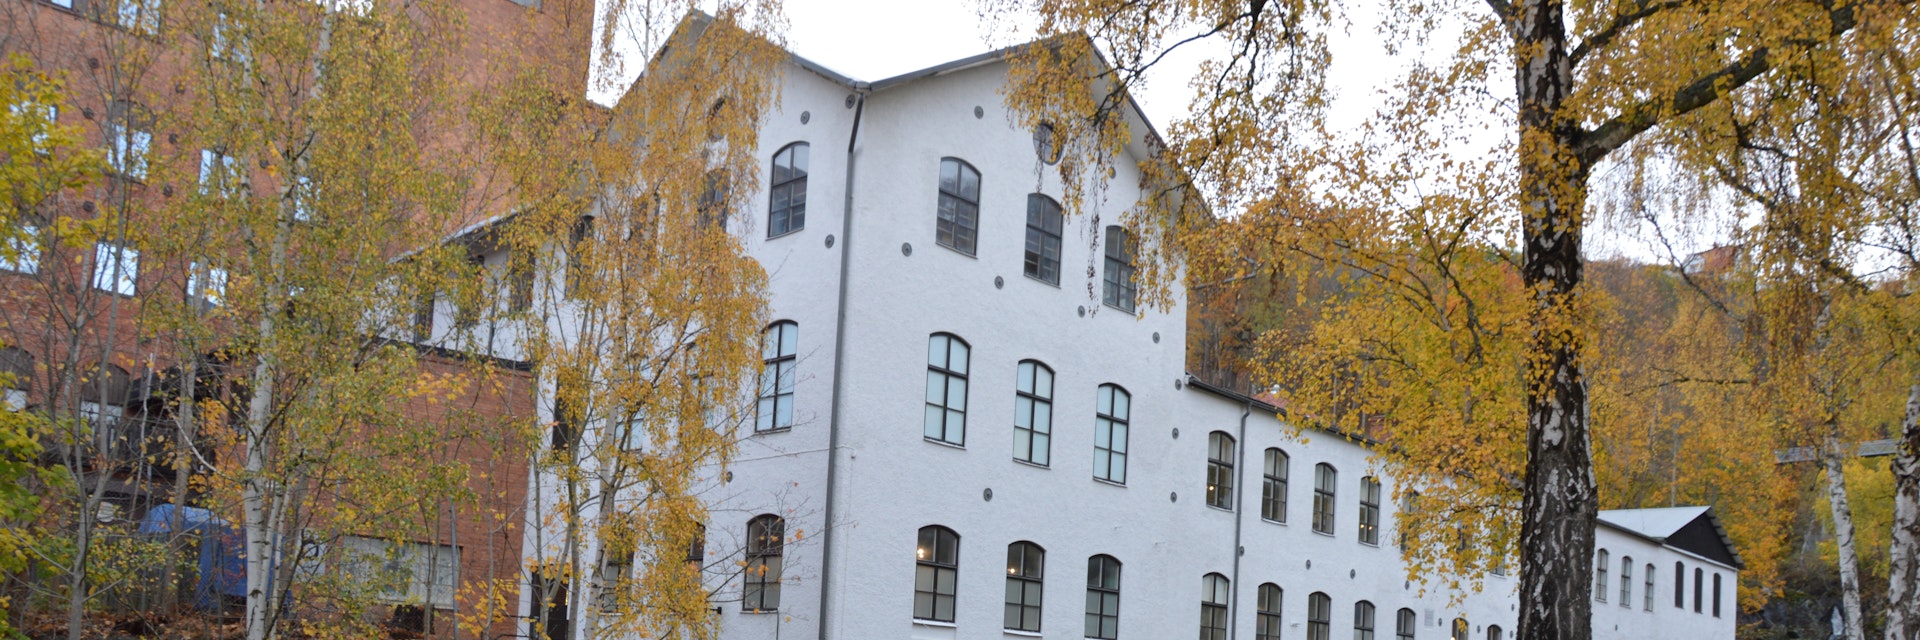 Exterior of Factory Museum Husqvarna.
